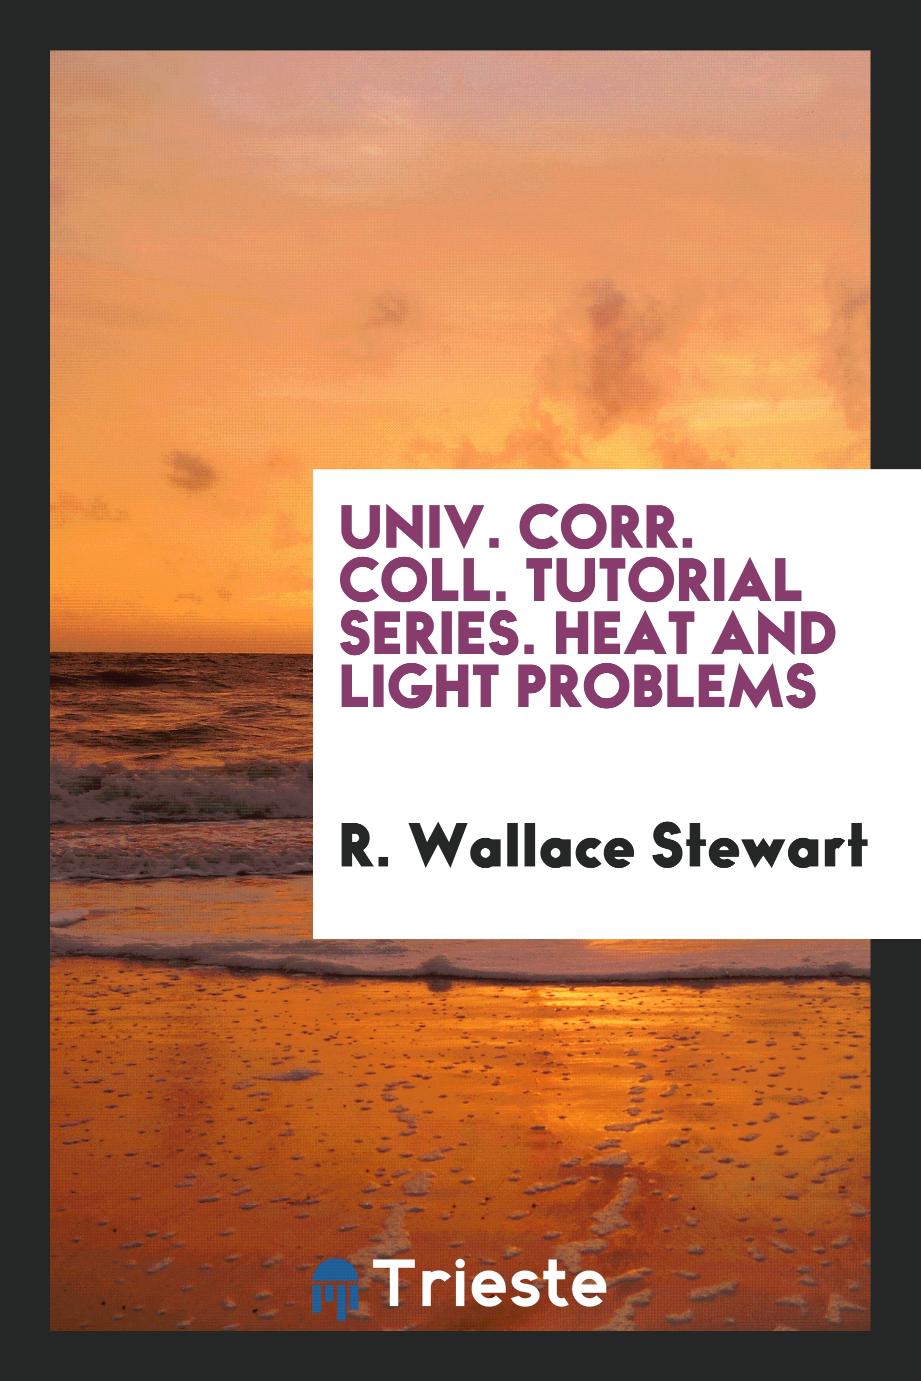 Univ. Corr. Coll. Tutorial Series. Heat and Light Problems